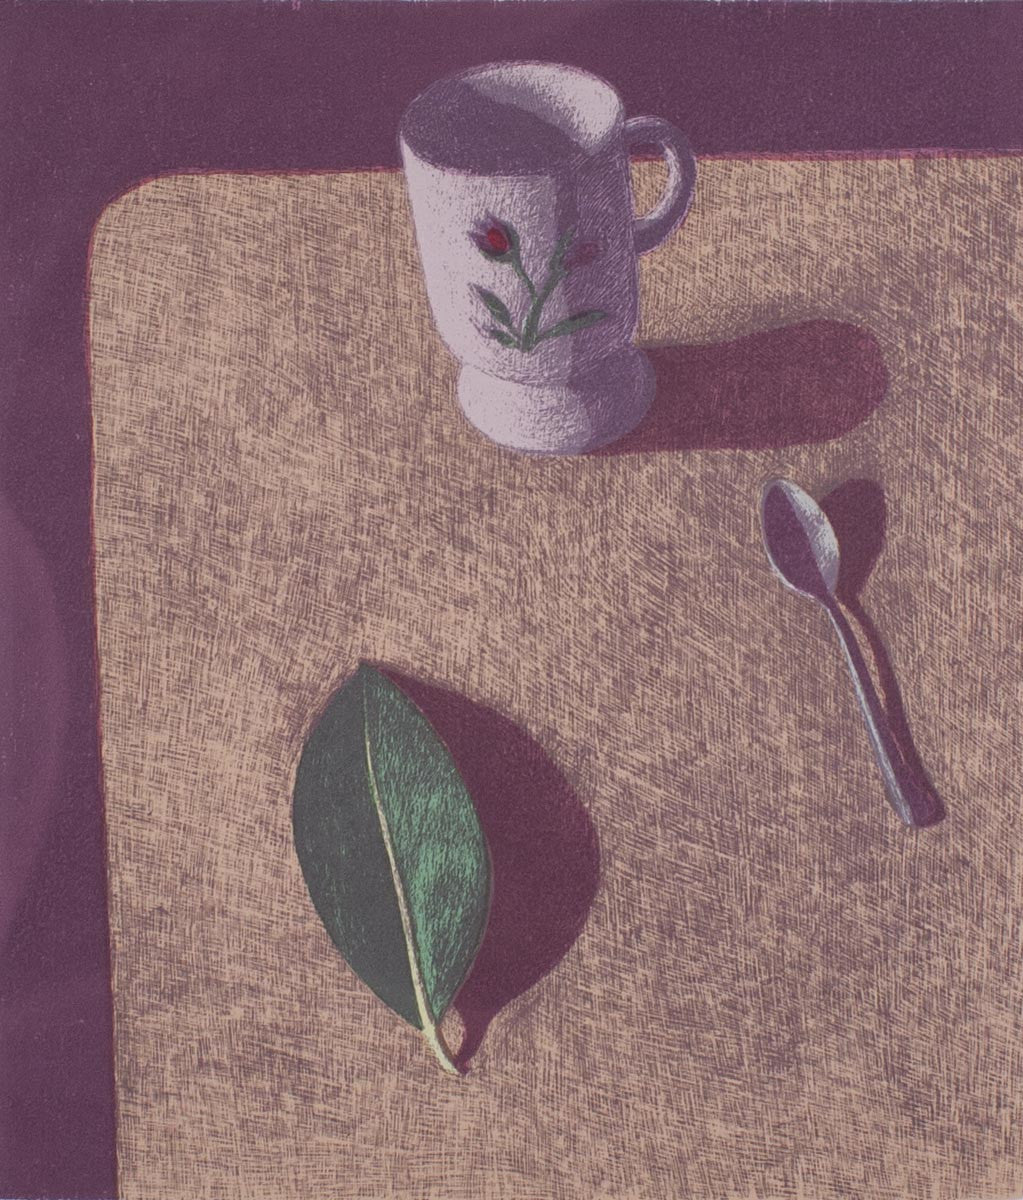 John Money 'Rose tea cup' - screenprint on paper